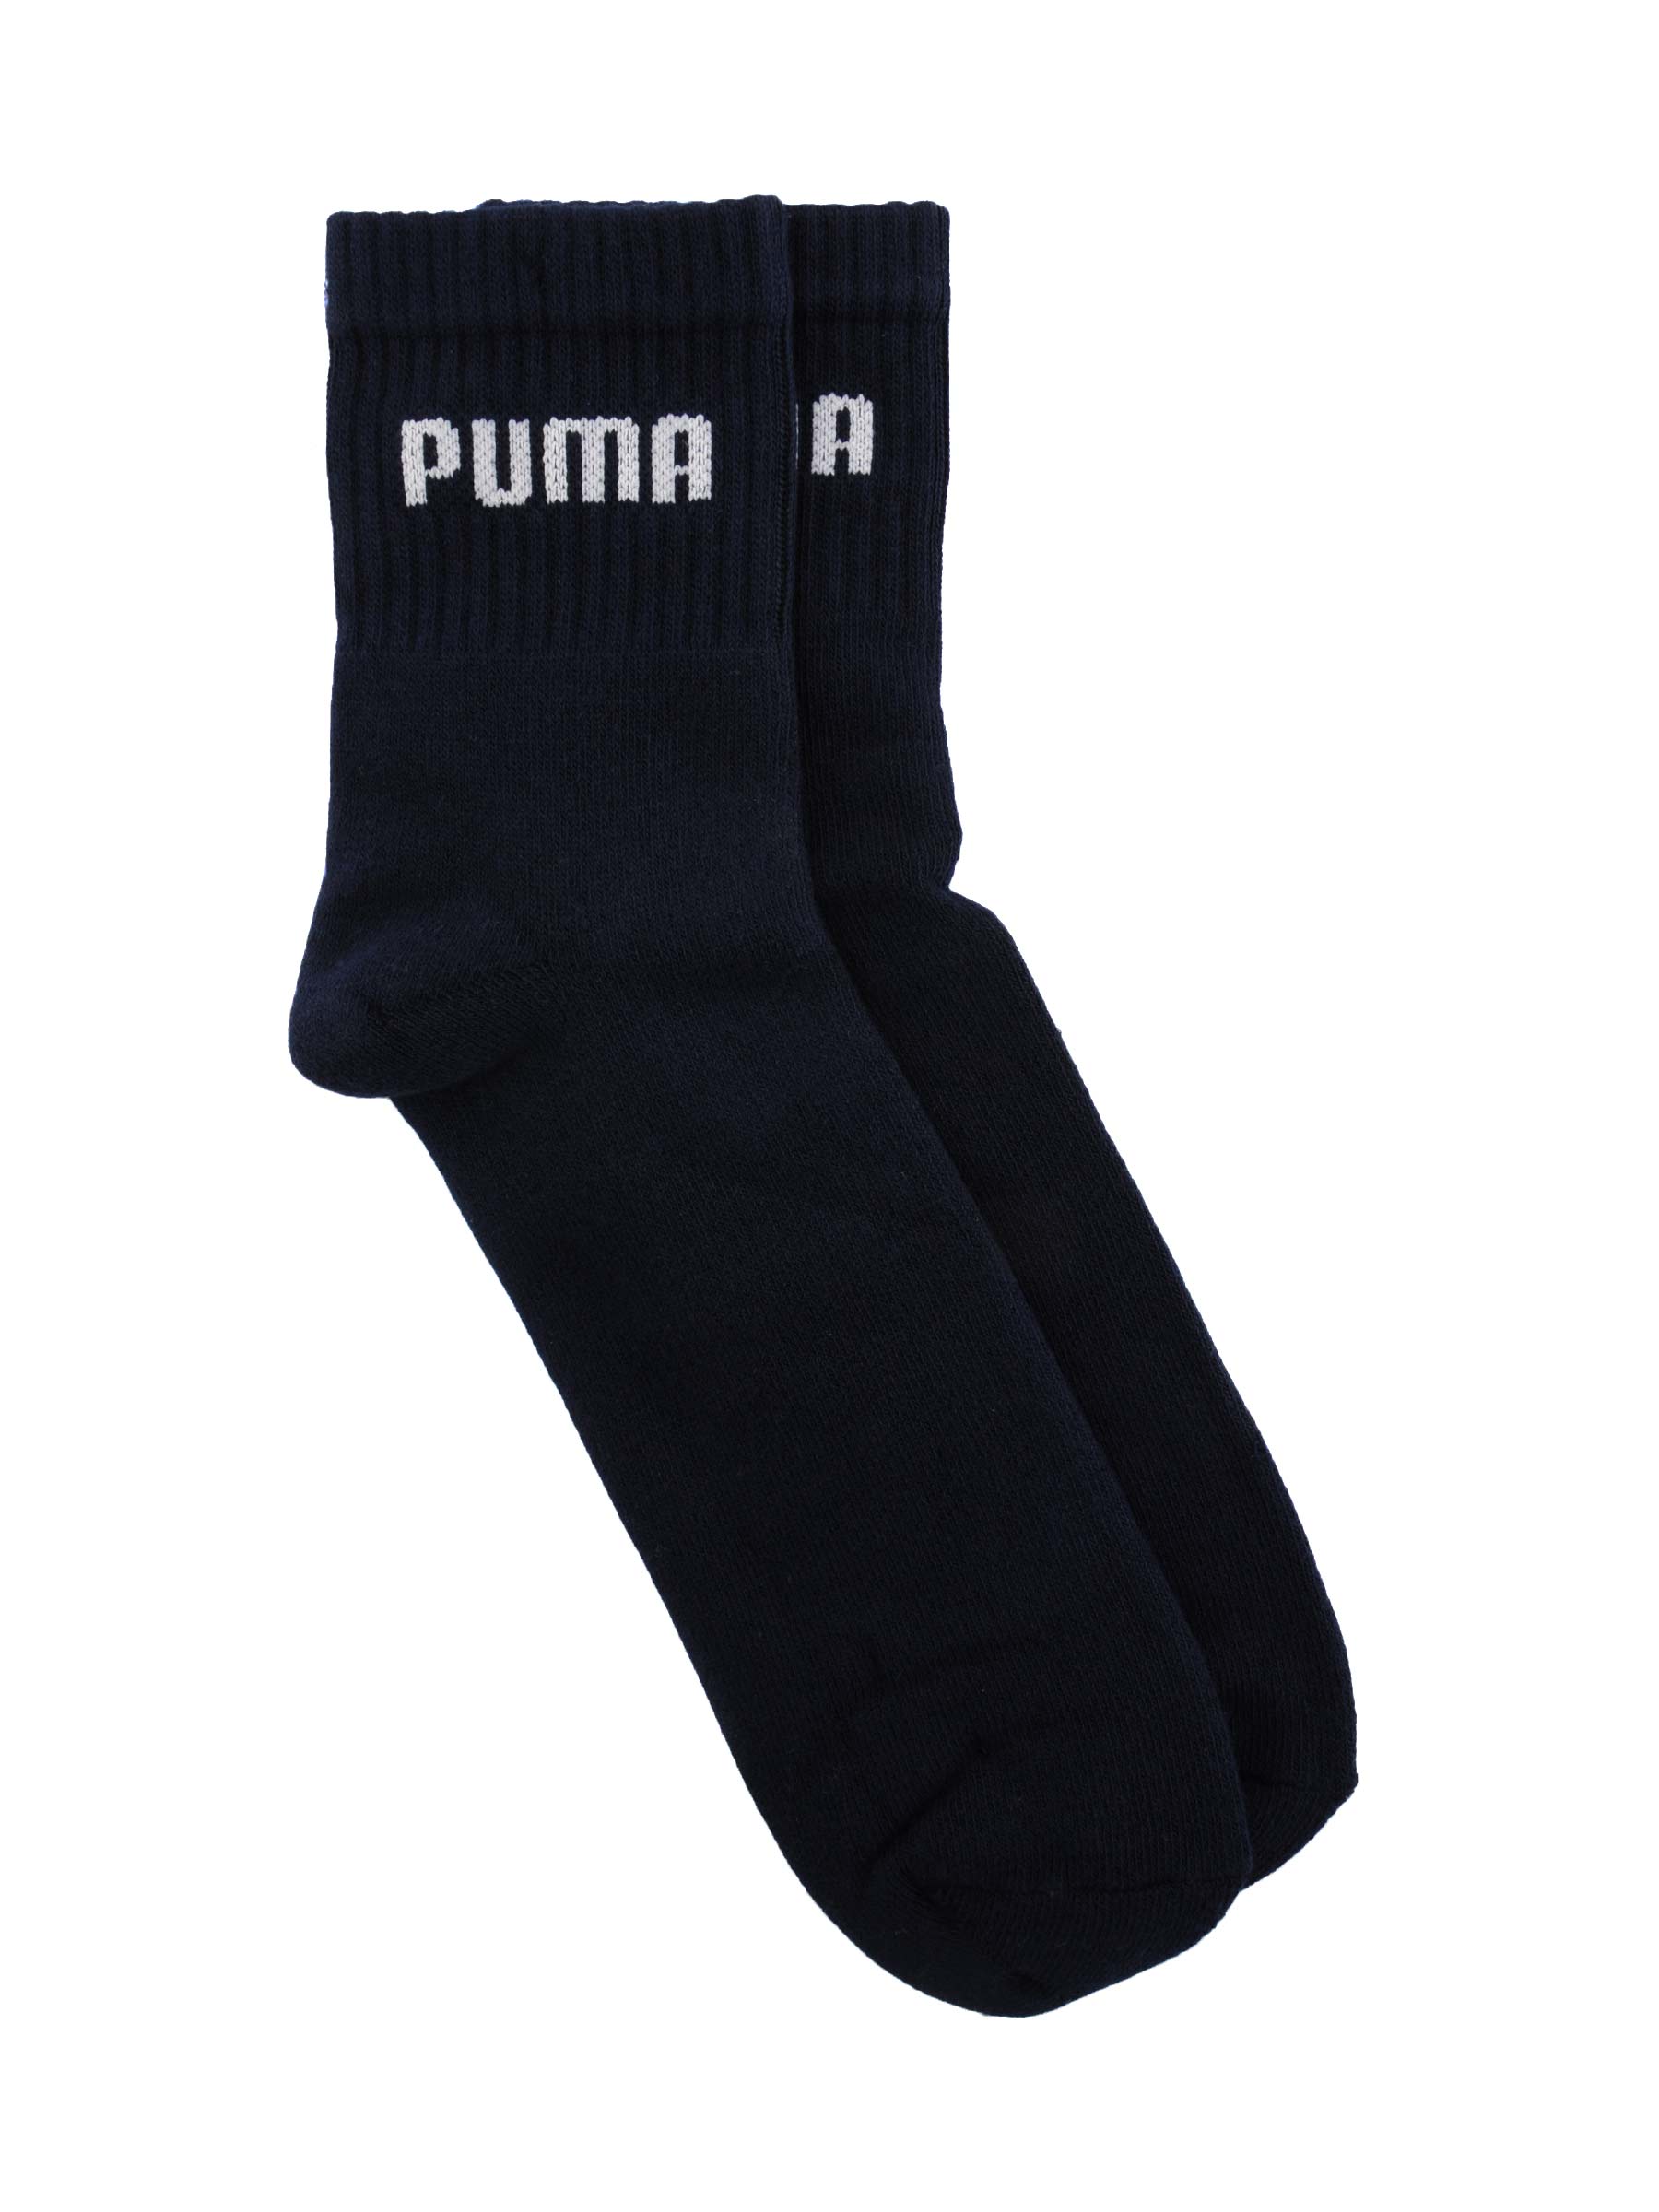 Puma Men Sport Quarters Navy Blue Socks